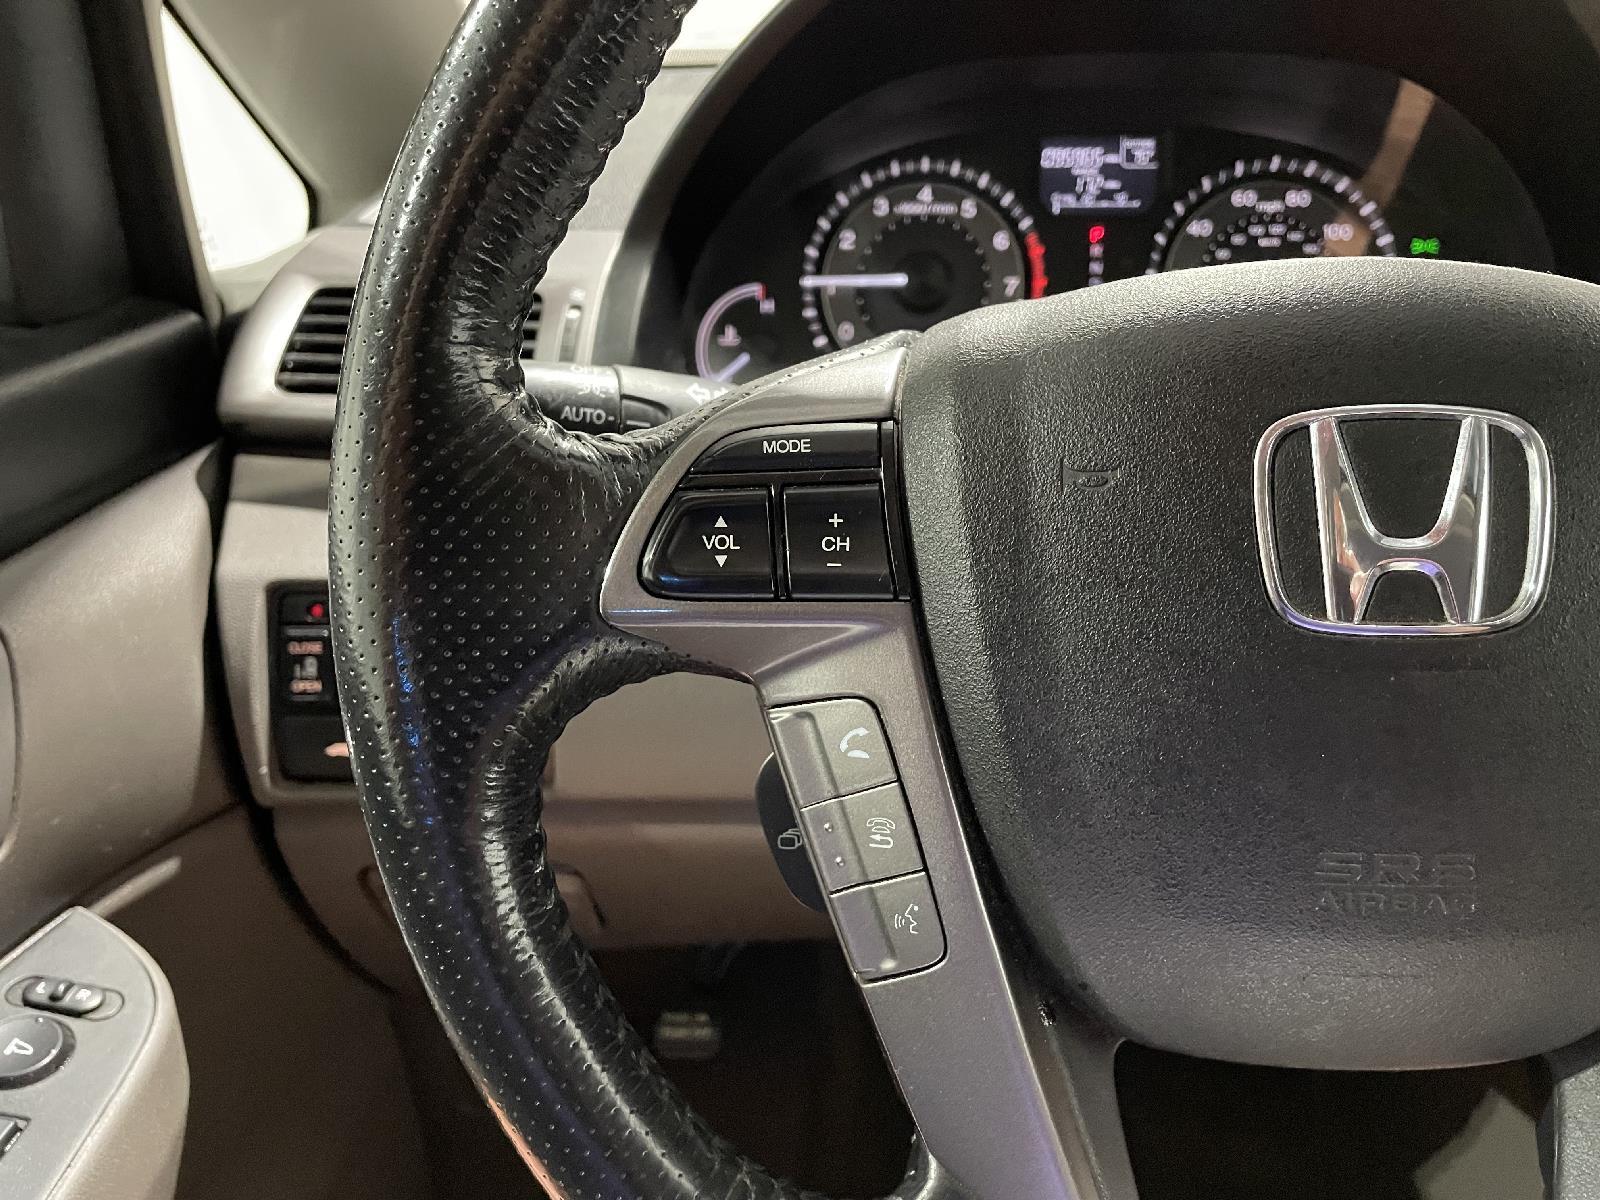 Used 2017 Honda Odyssey EX-L Minivans for sale in St Joseph MO